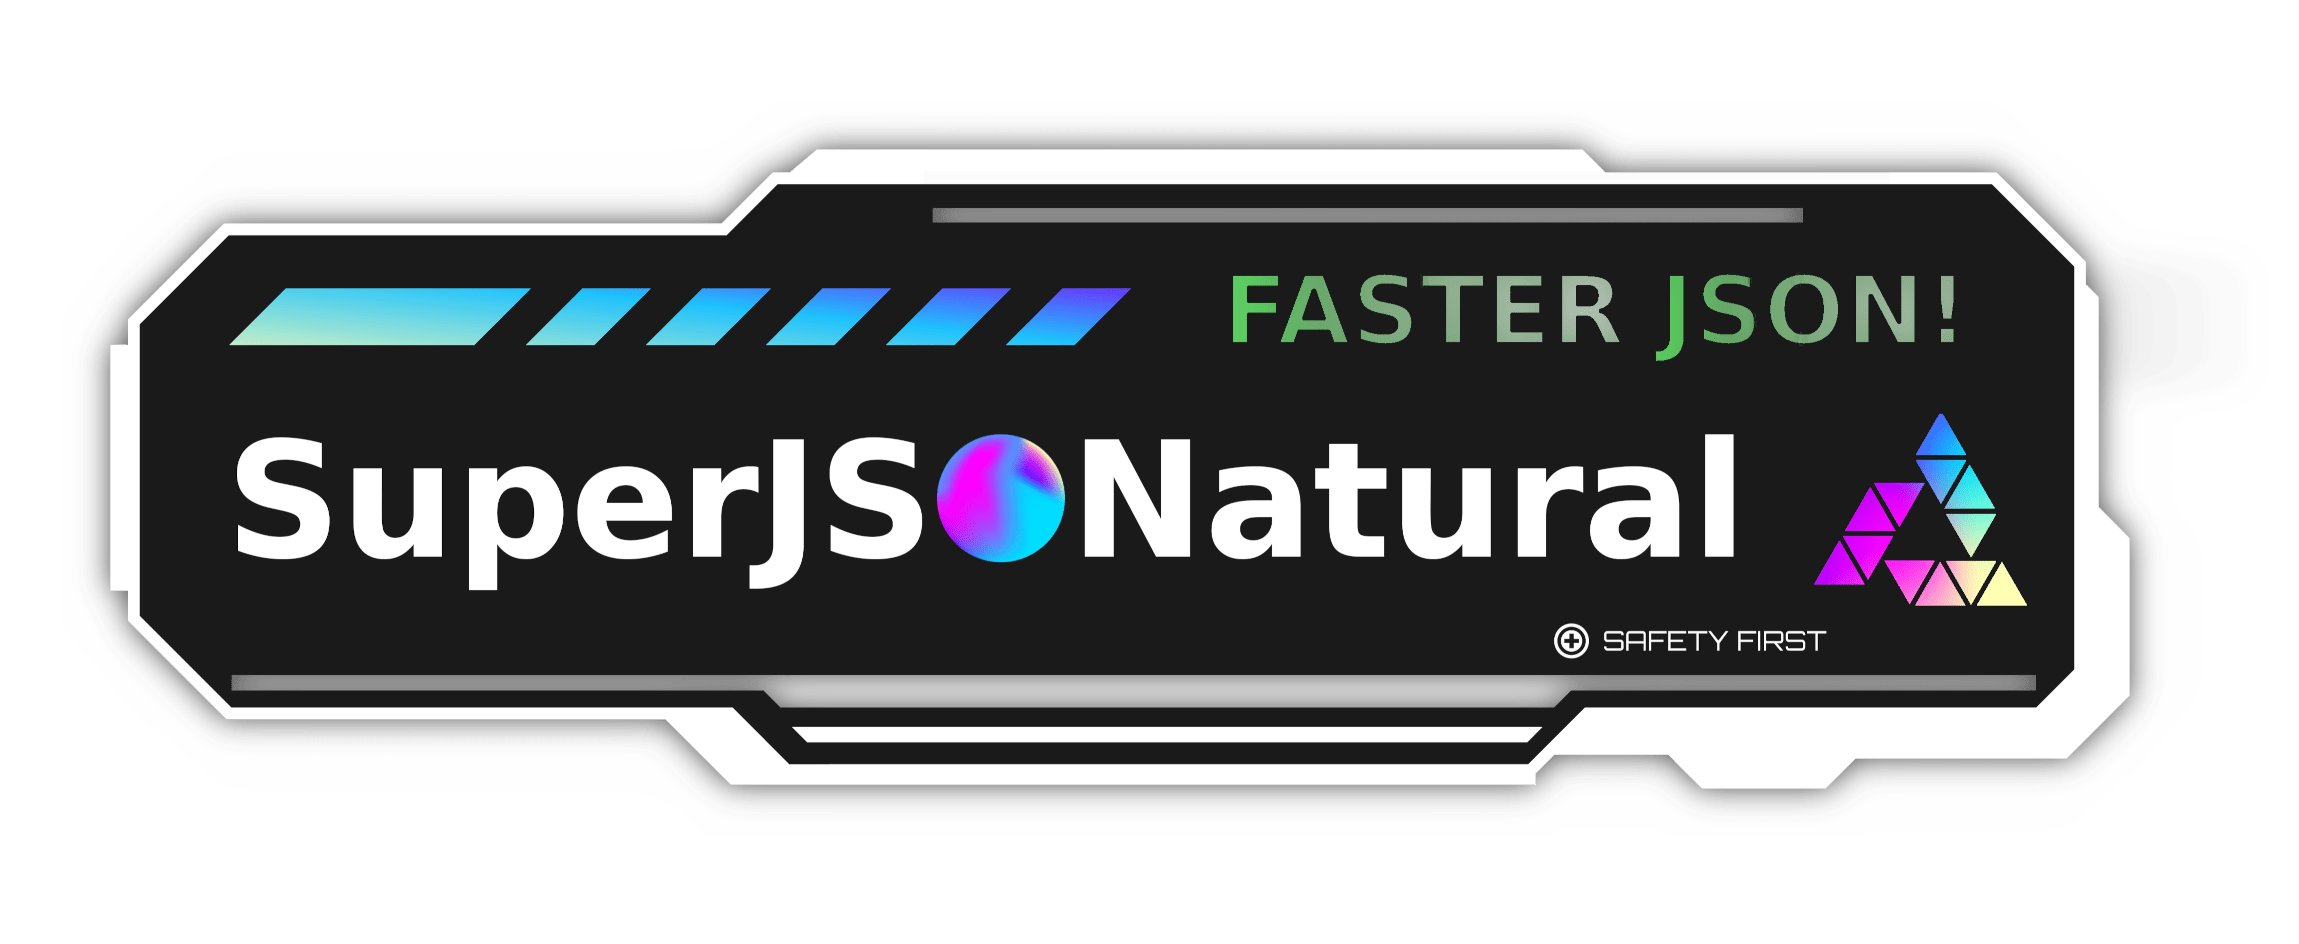 SuperJSONatural branding logo